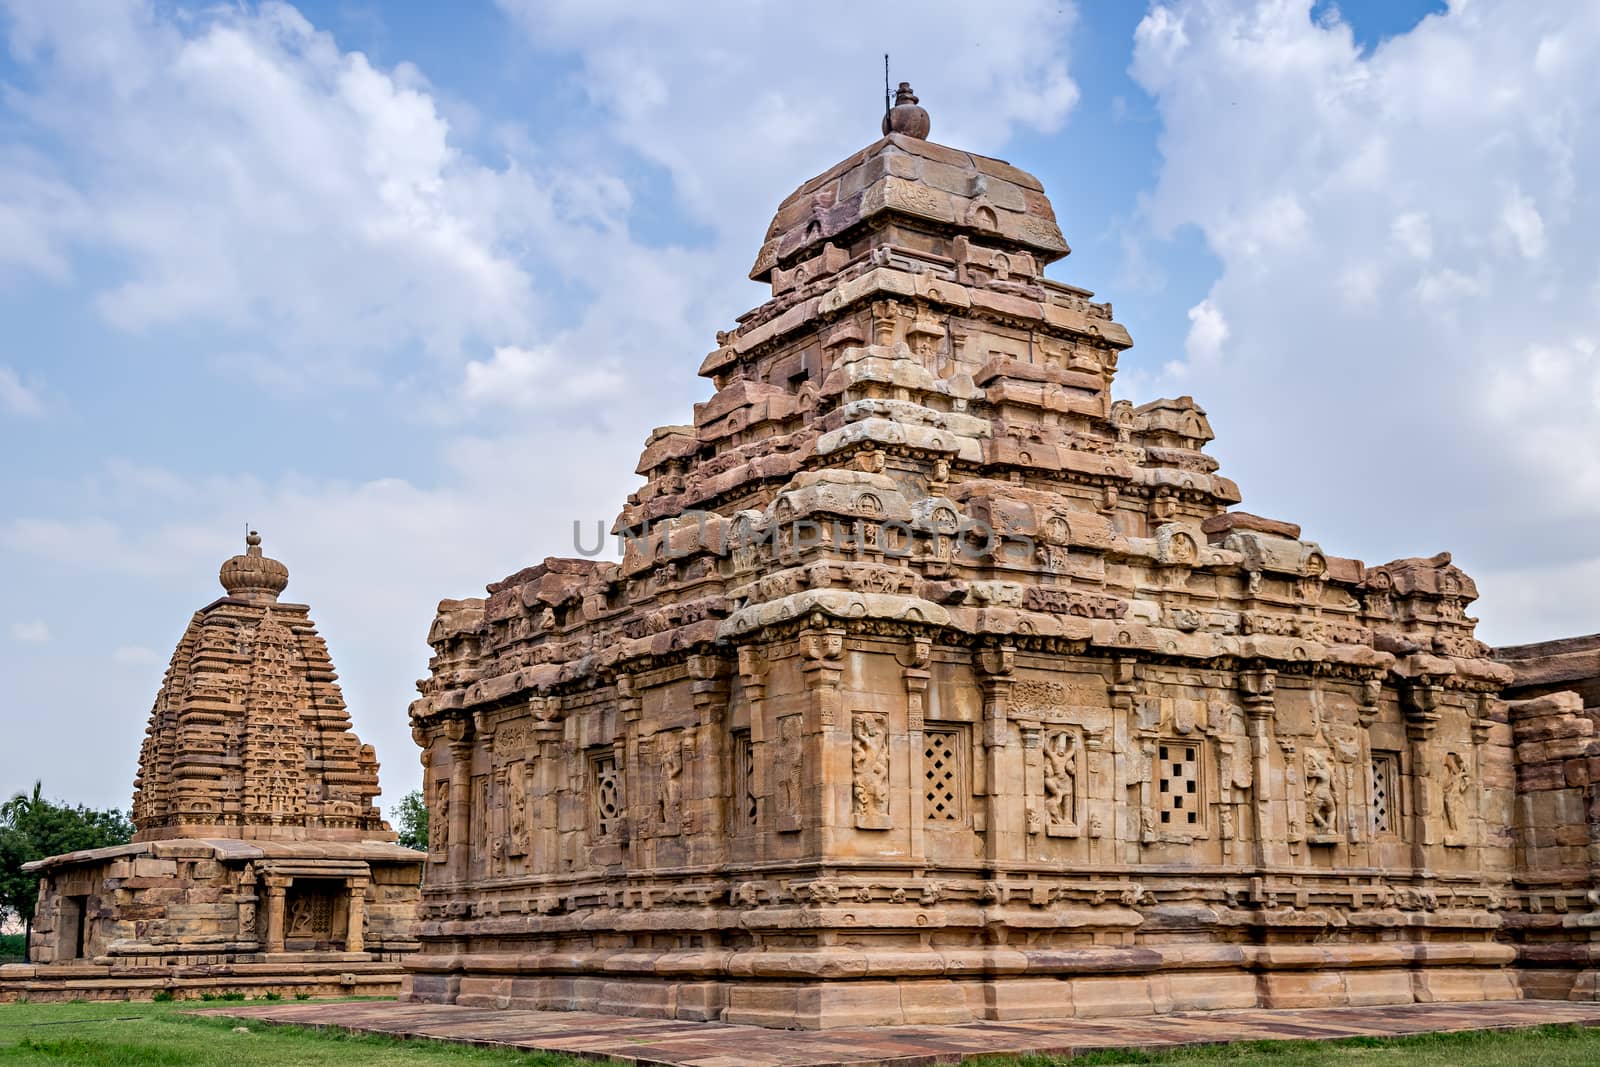 Sangamesvara or Vijesvara stone temple ,in Pattadakal temple complex, Karnataka, India.